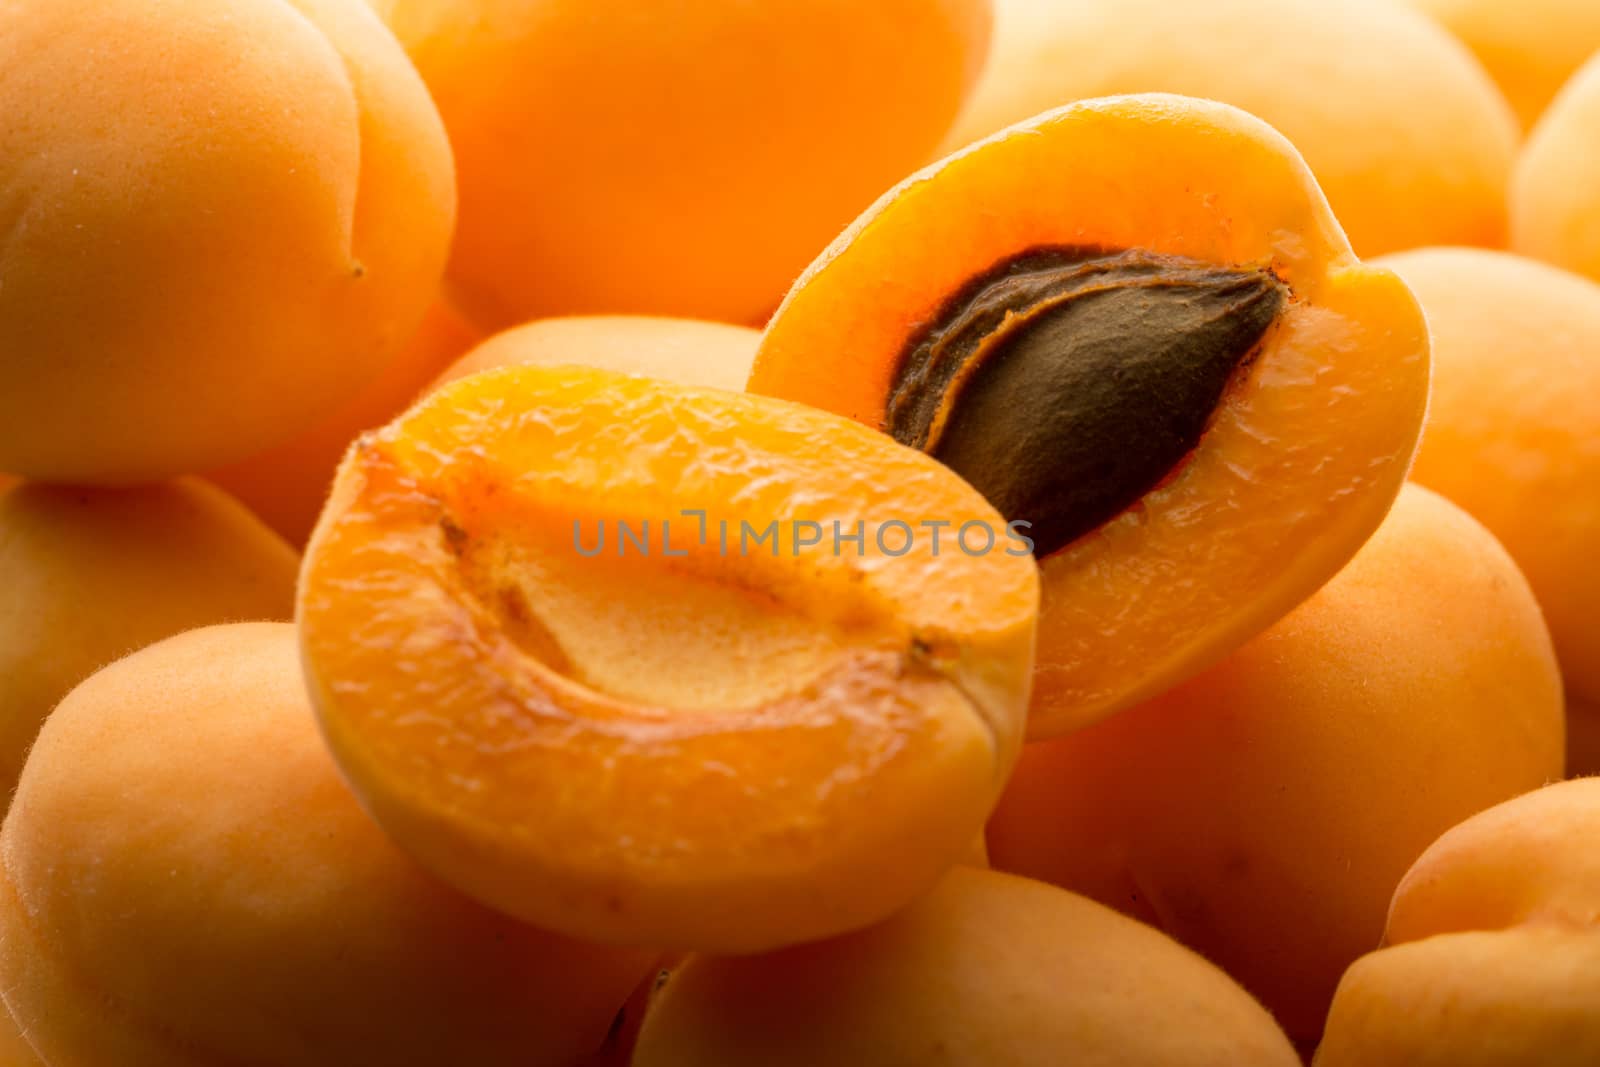 Ripe apricots on white background by Garsya